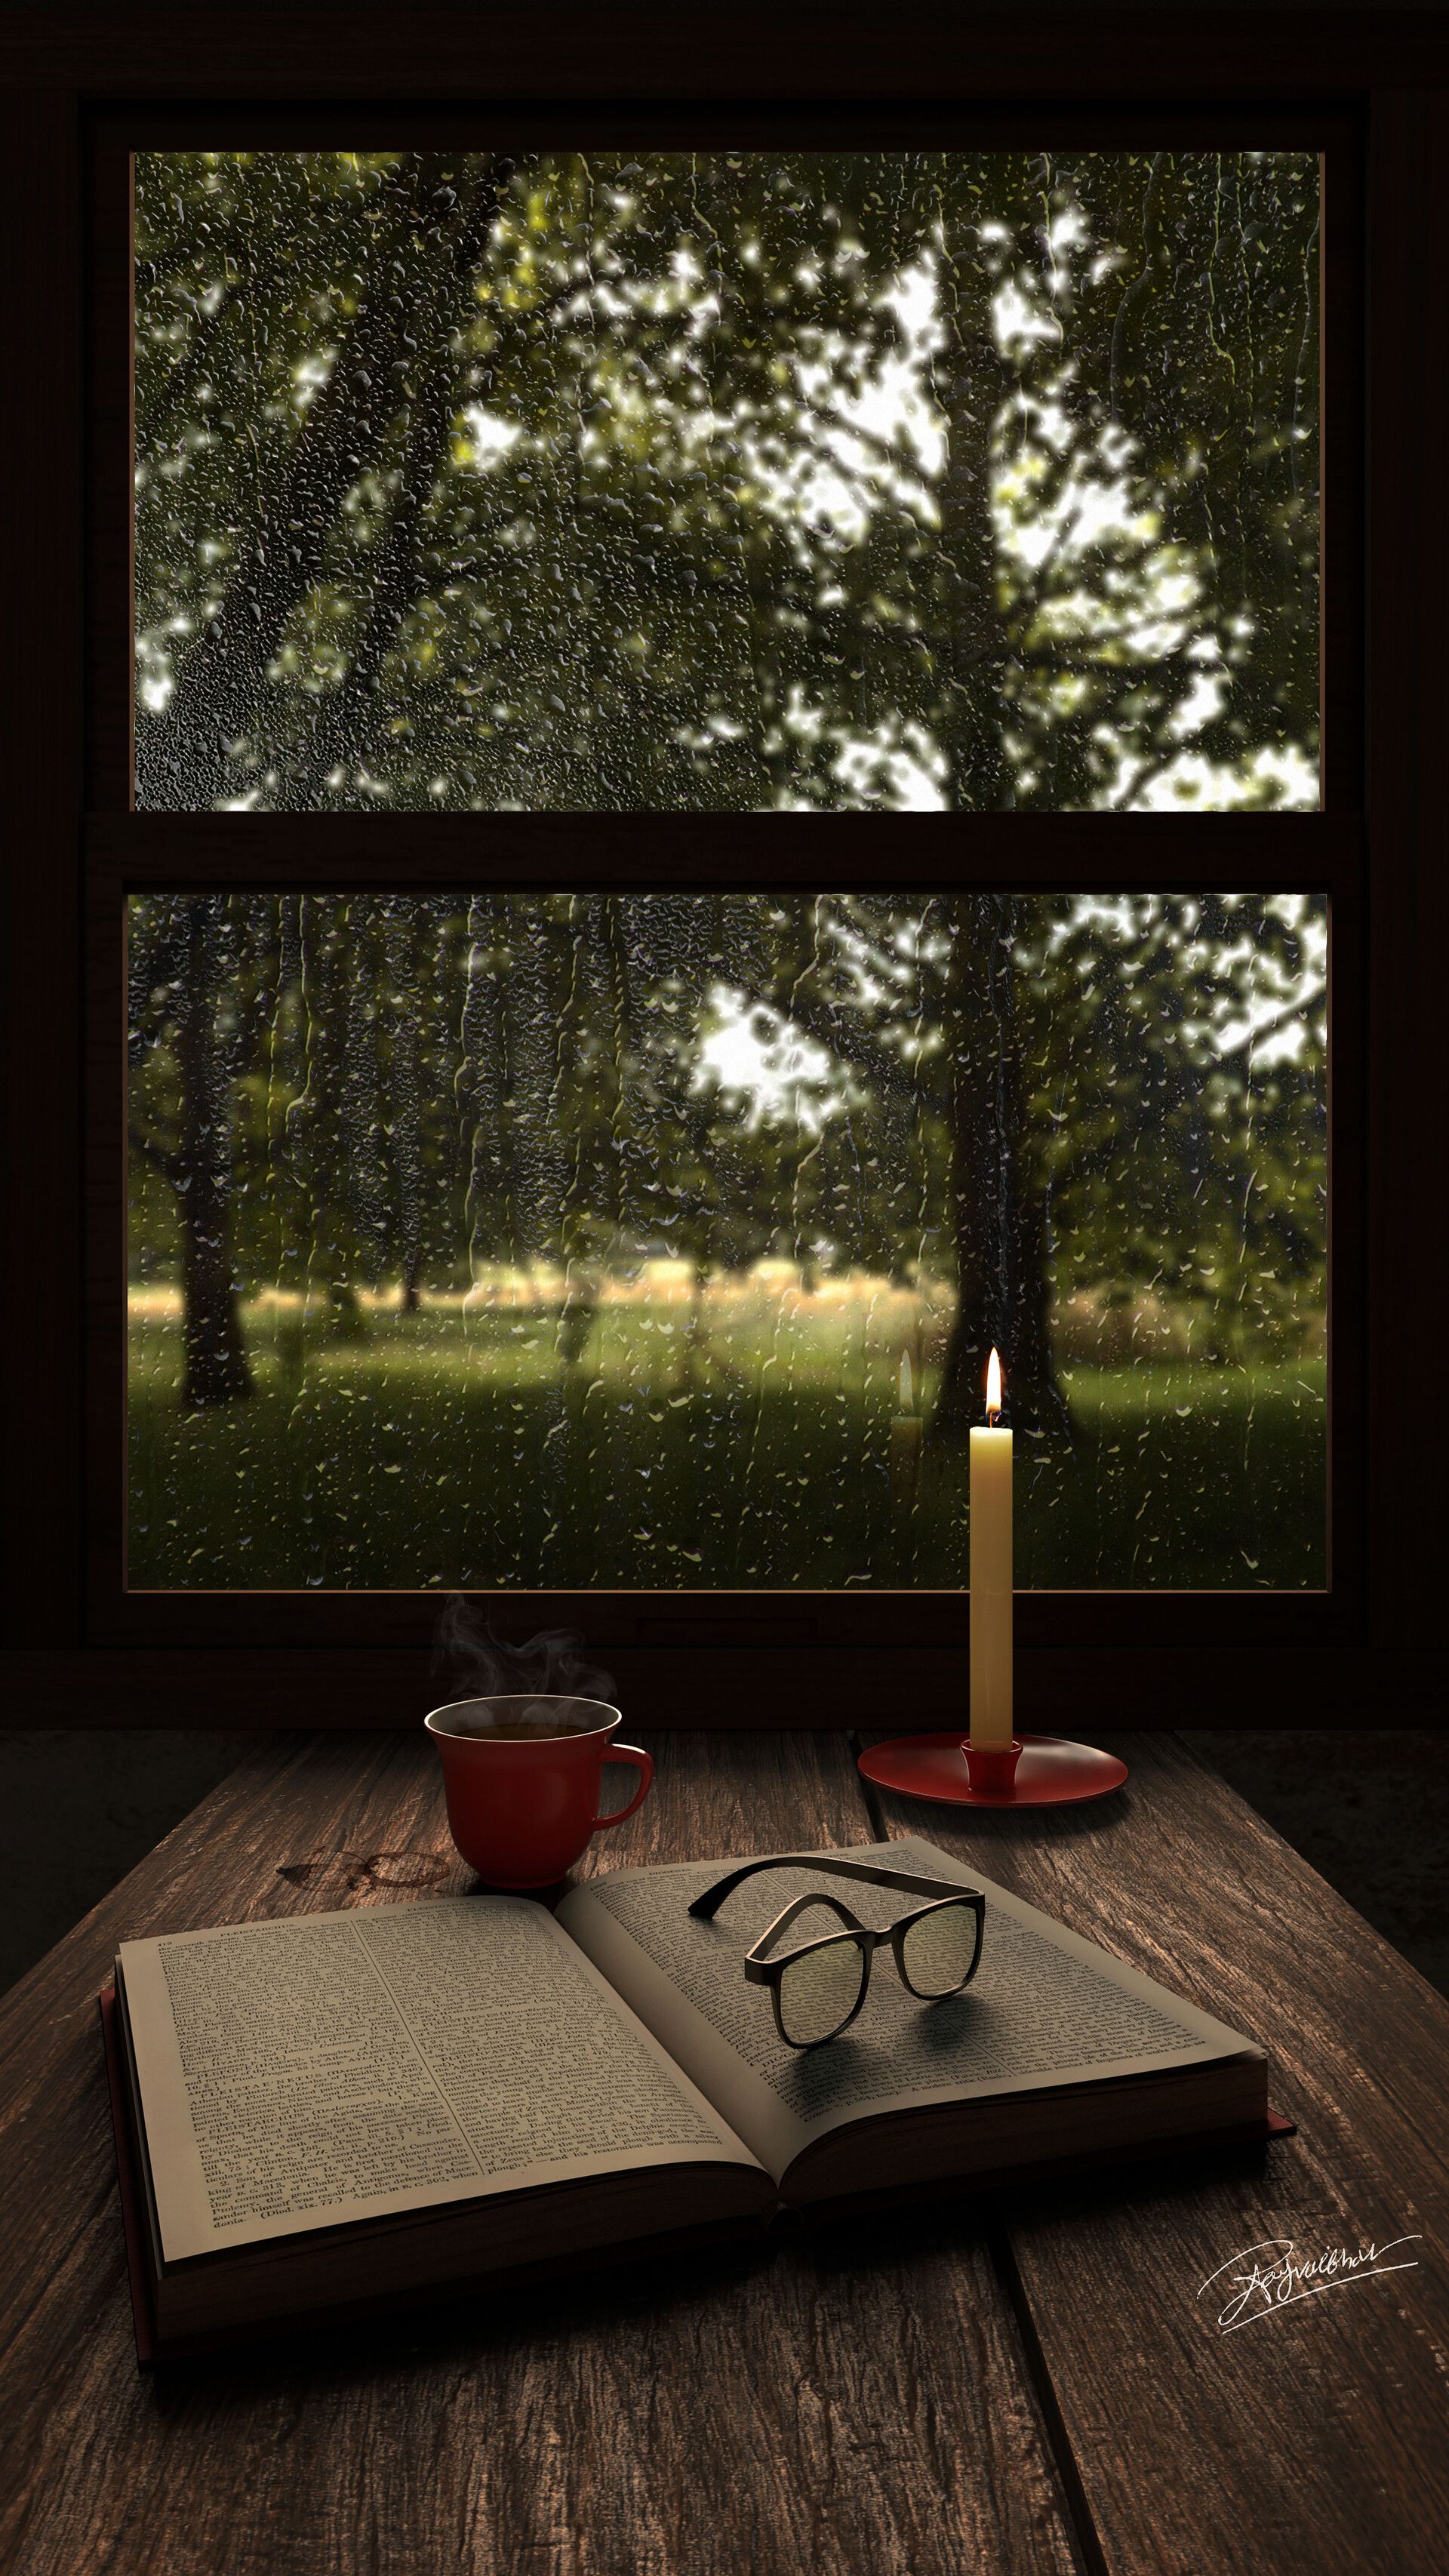 Rainy Window by Rajvaibhav Poyekar1st test in Maya Arnold Modeling Texturing Lighting. Rainy window, Rainy day photography, Rain wallpaper